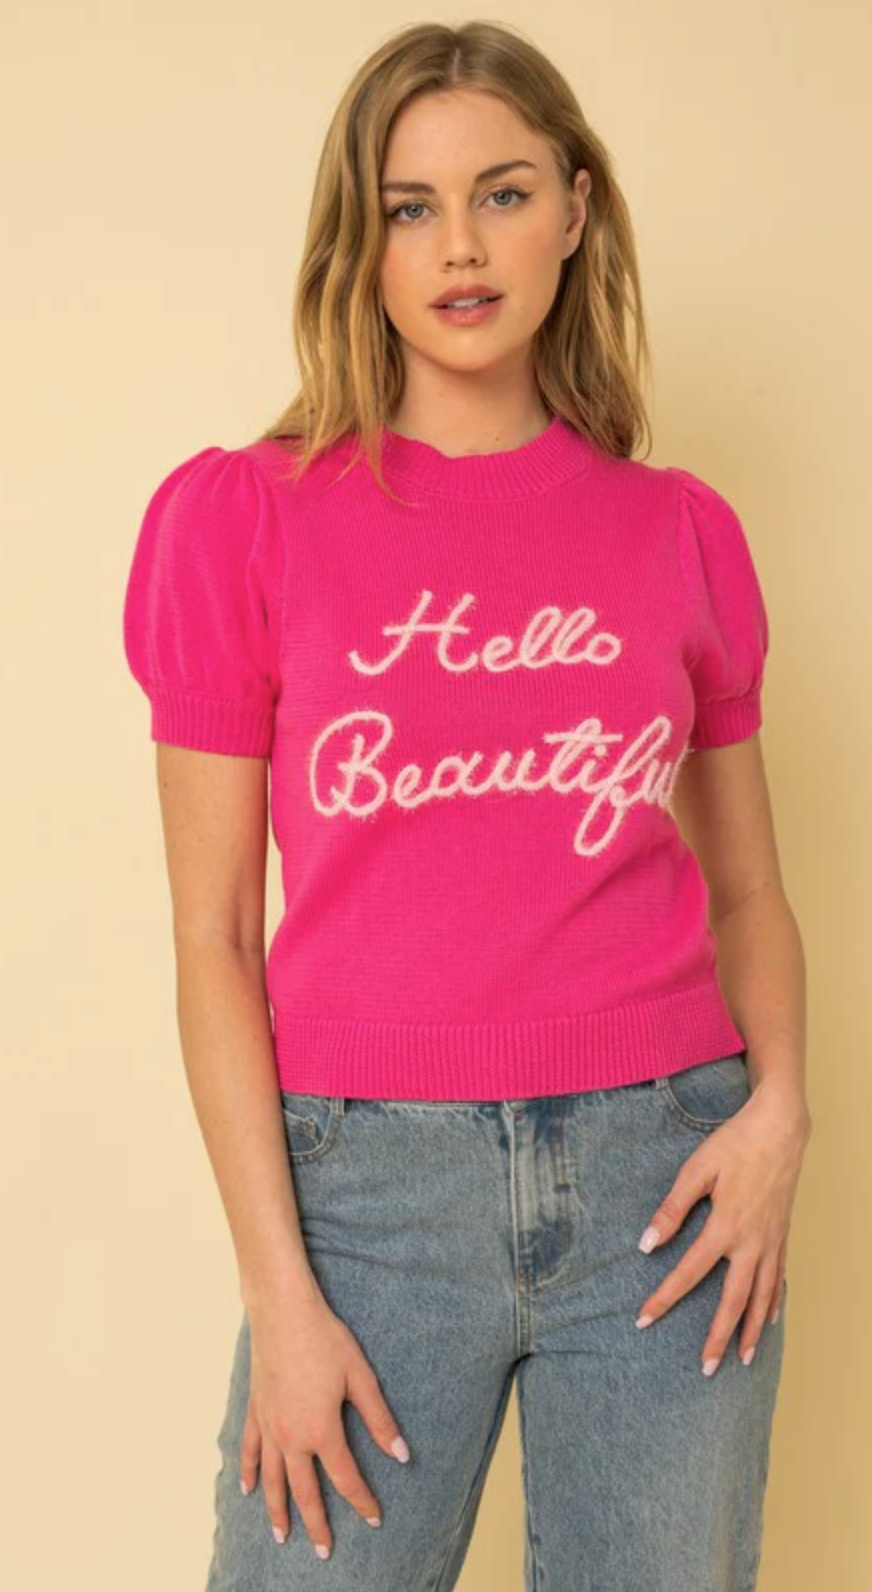 Gilli "Hello Beautiful" Short Sleeve Sweater Top